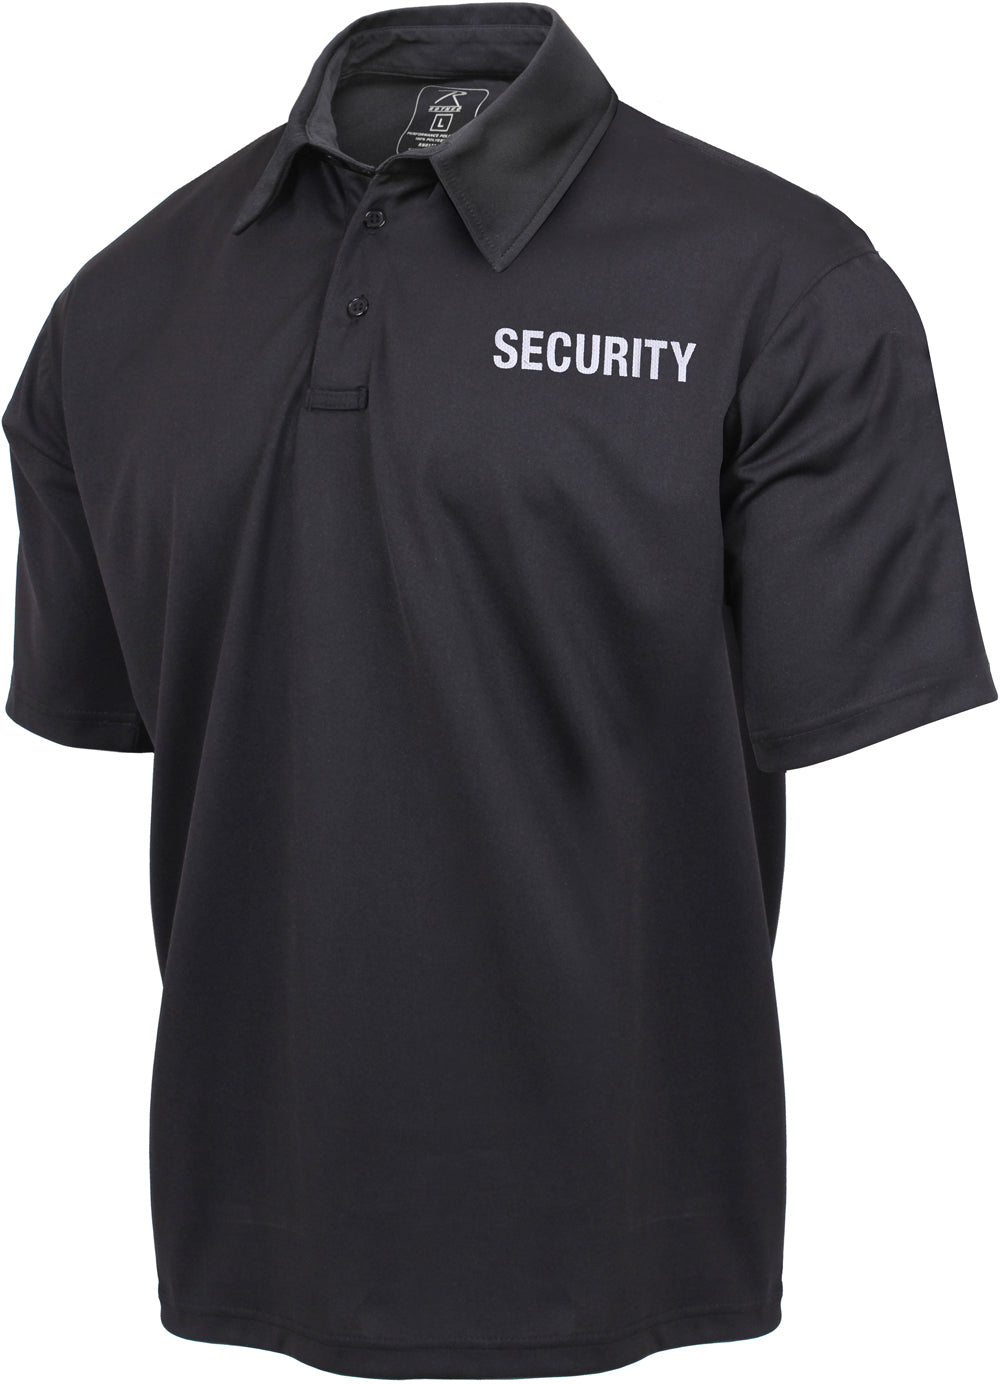 Black - SECURITY Moisture Wicking Golf Shirt